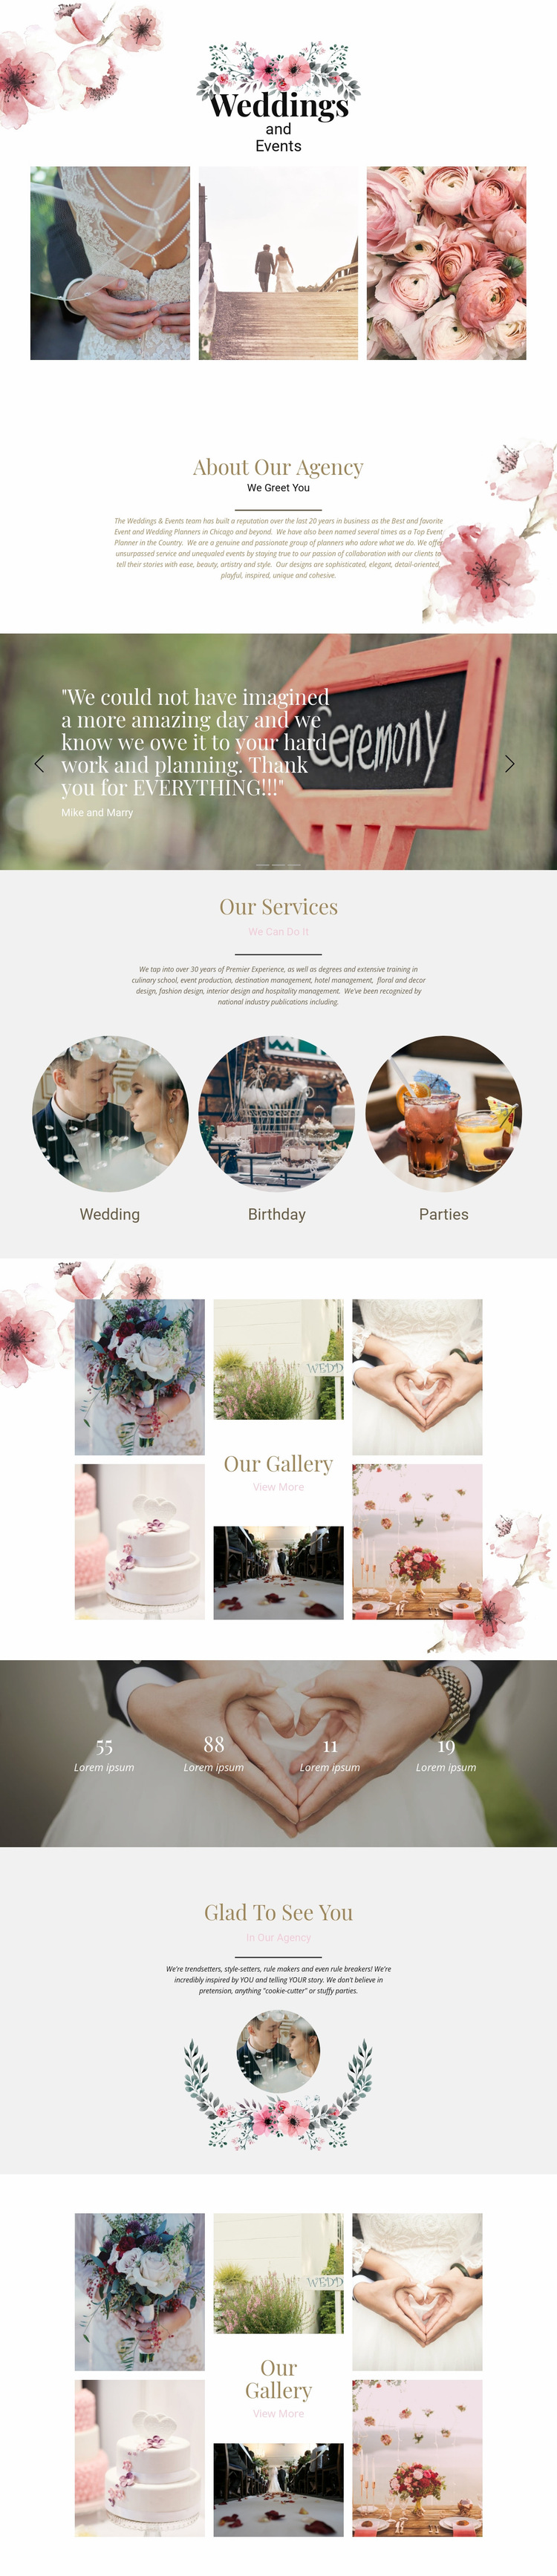 Moments of wedding Website Builder Templates